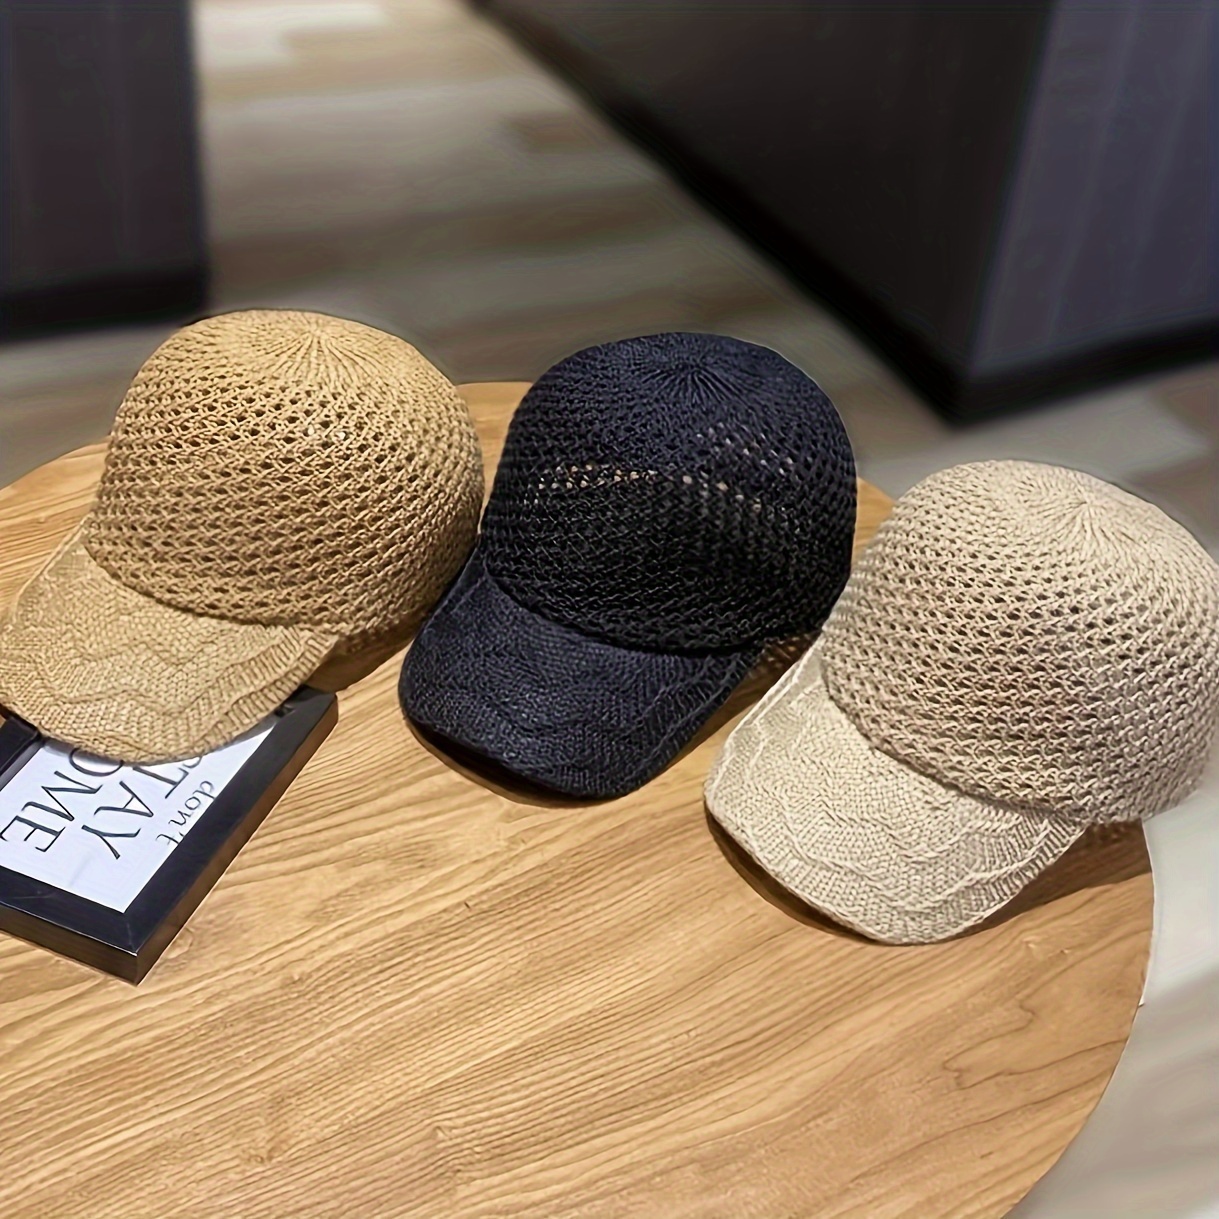 

Women's Breathable Crochet Straw Baseball Cap, Adjustable Sun Protection Summer Hats With Sweatband, Fashion Outdoor Headwear In Black & Beige